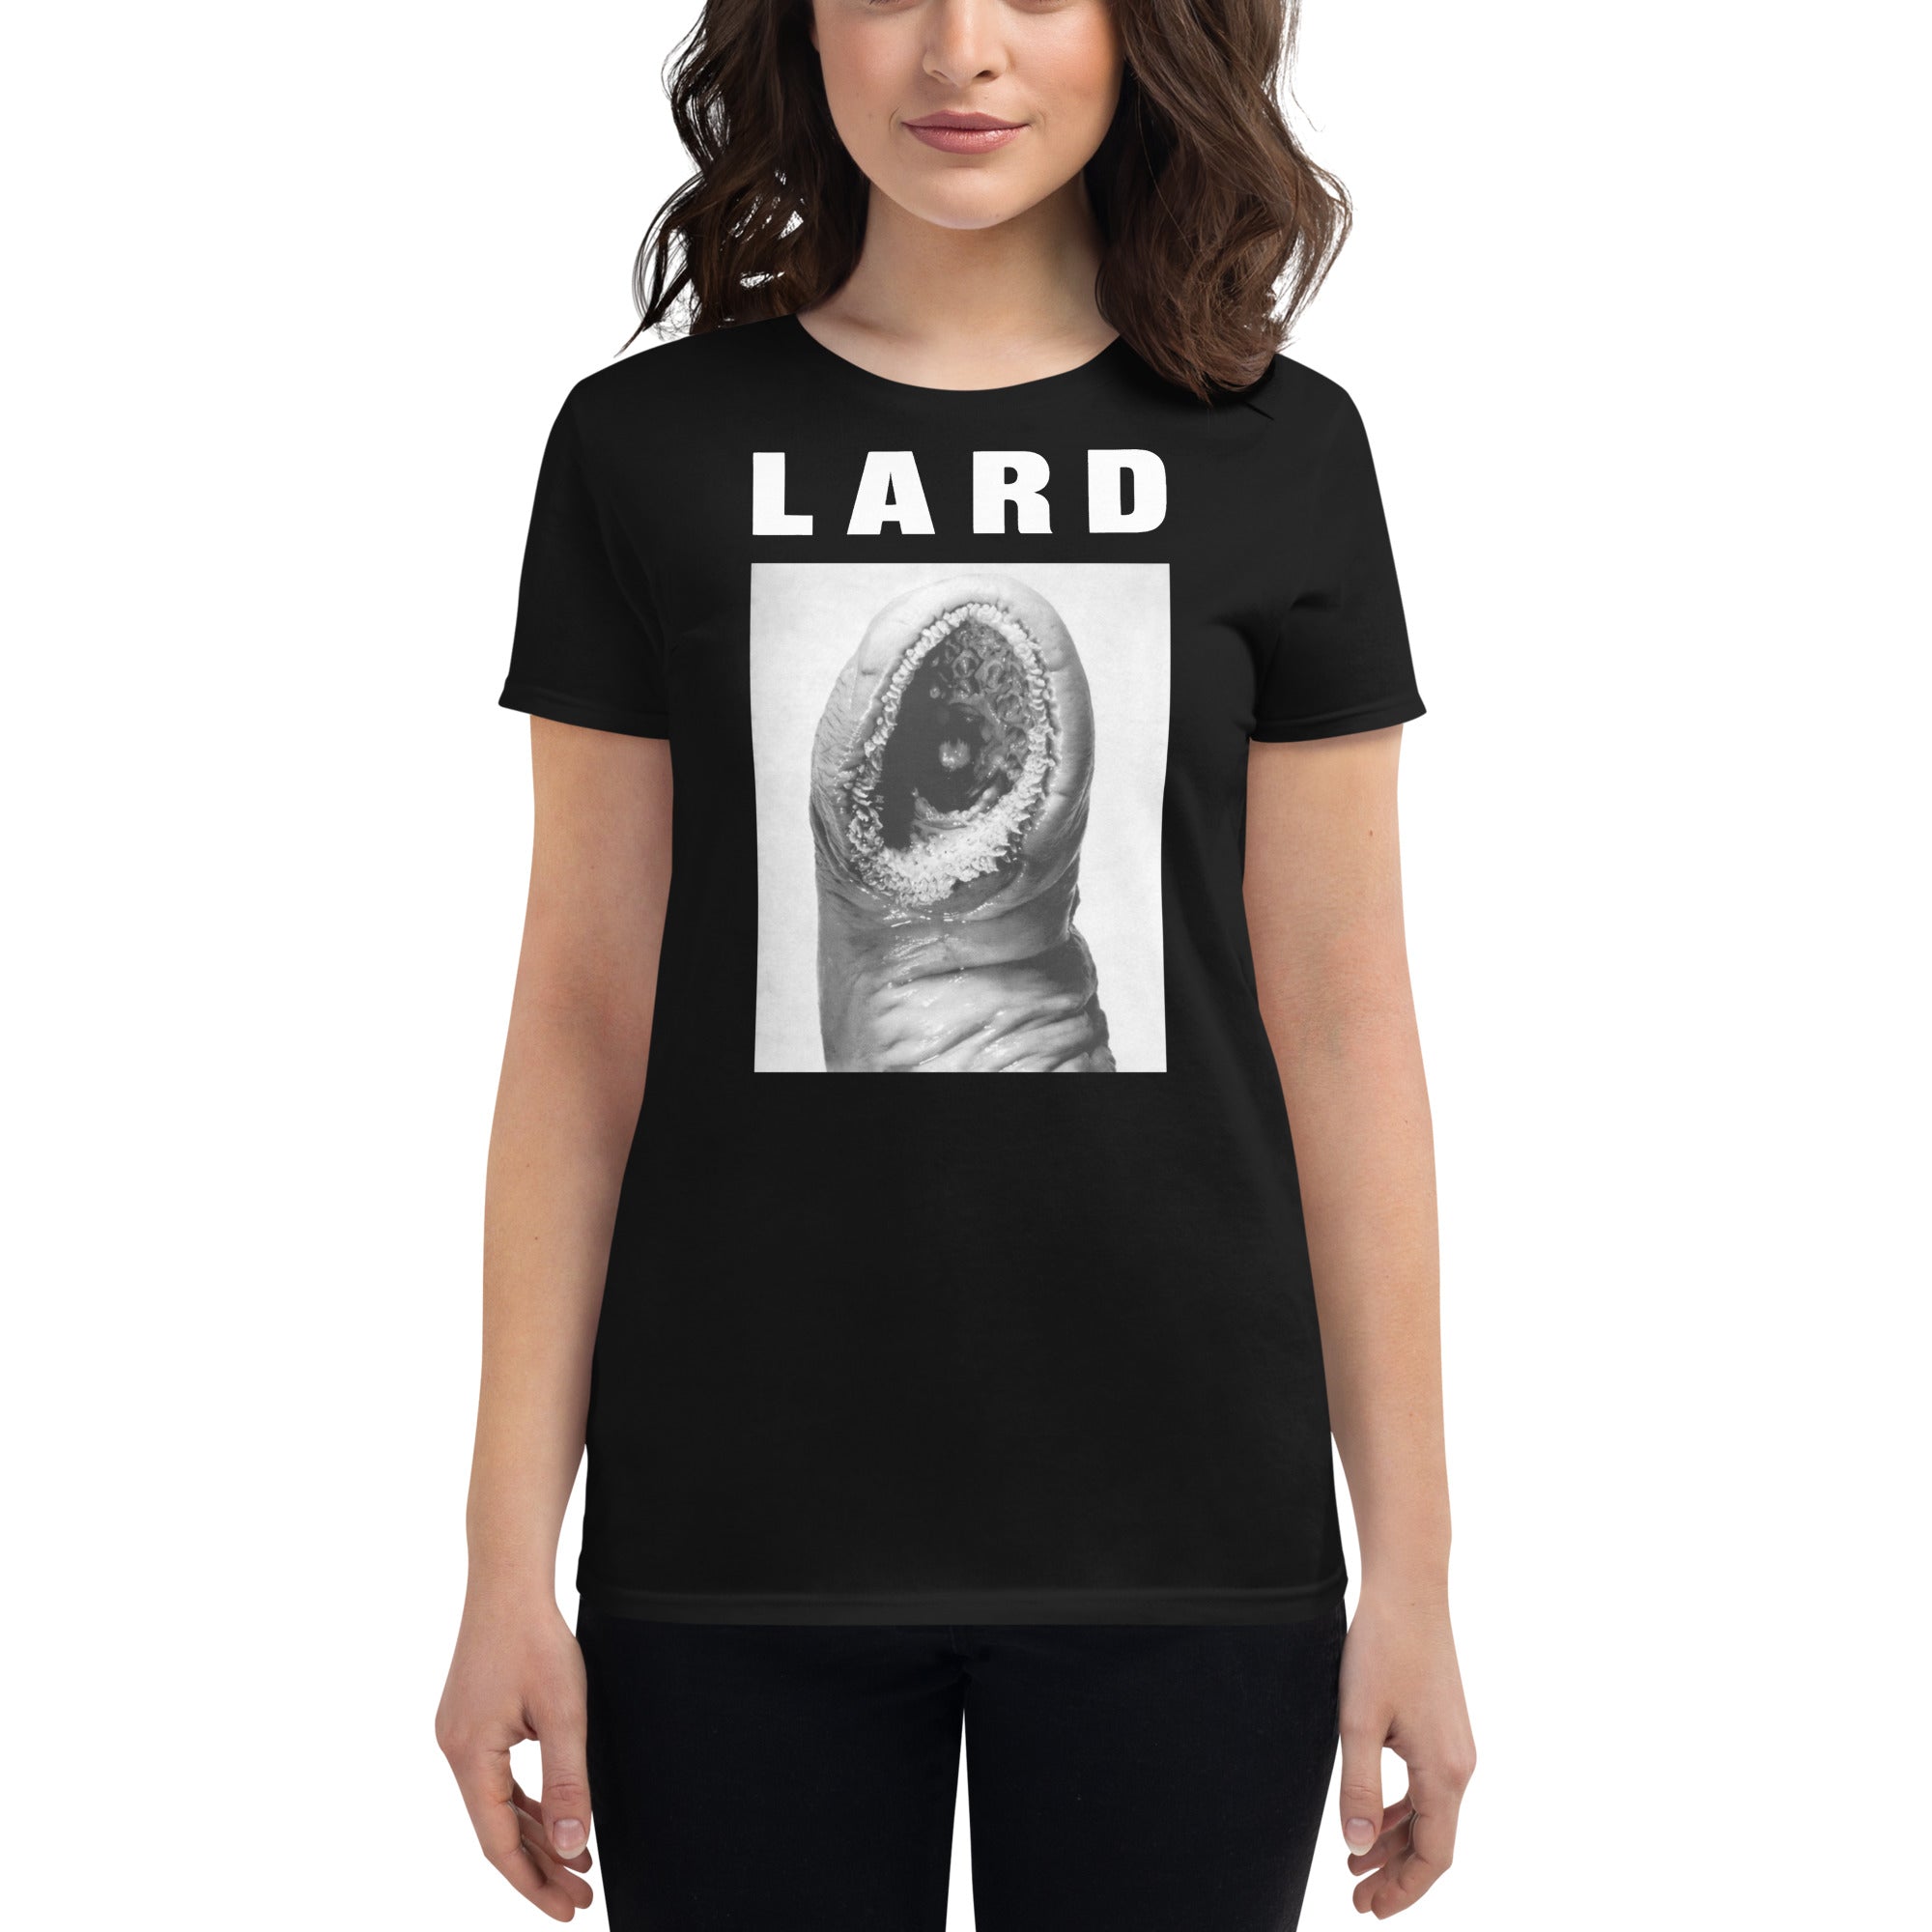 LARD "The Power Of Lard" Fitted Black T-Shirt